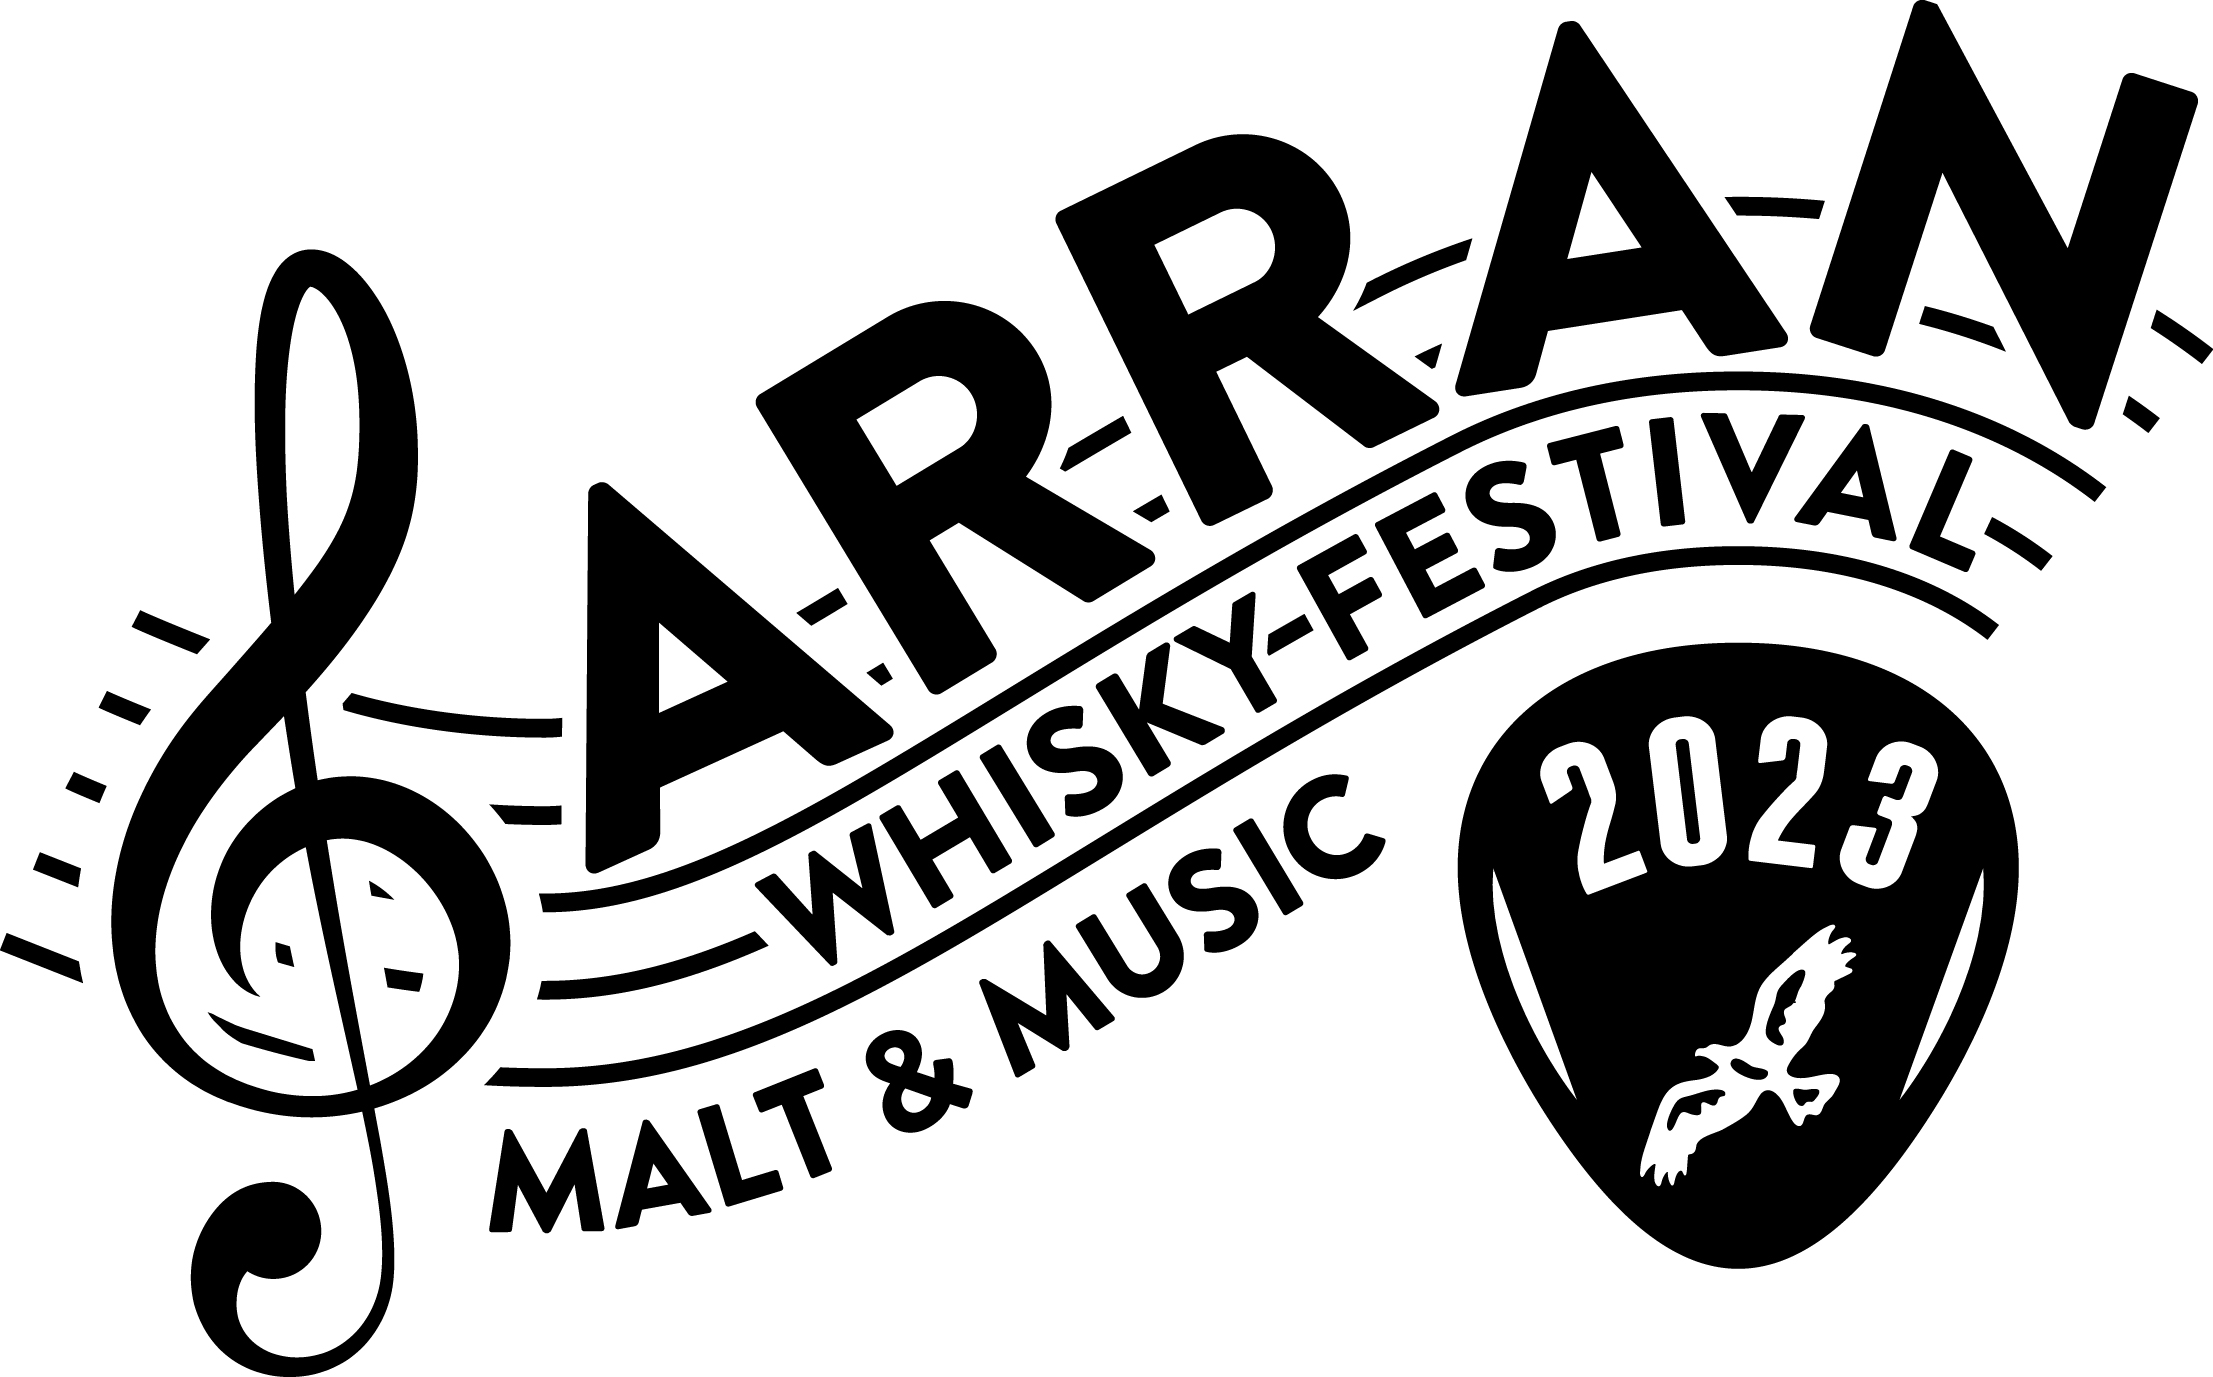 Arran_Whisky Festival Malt and Music